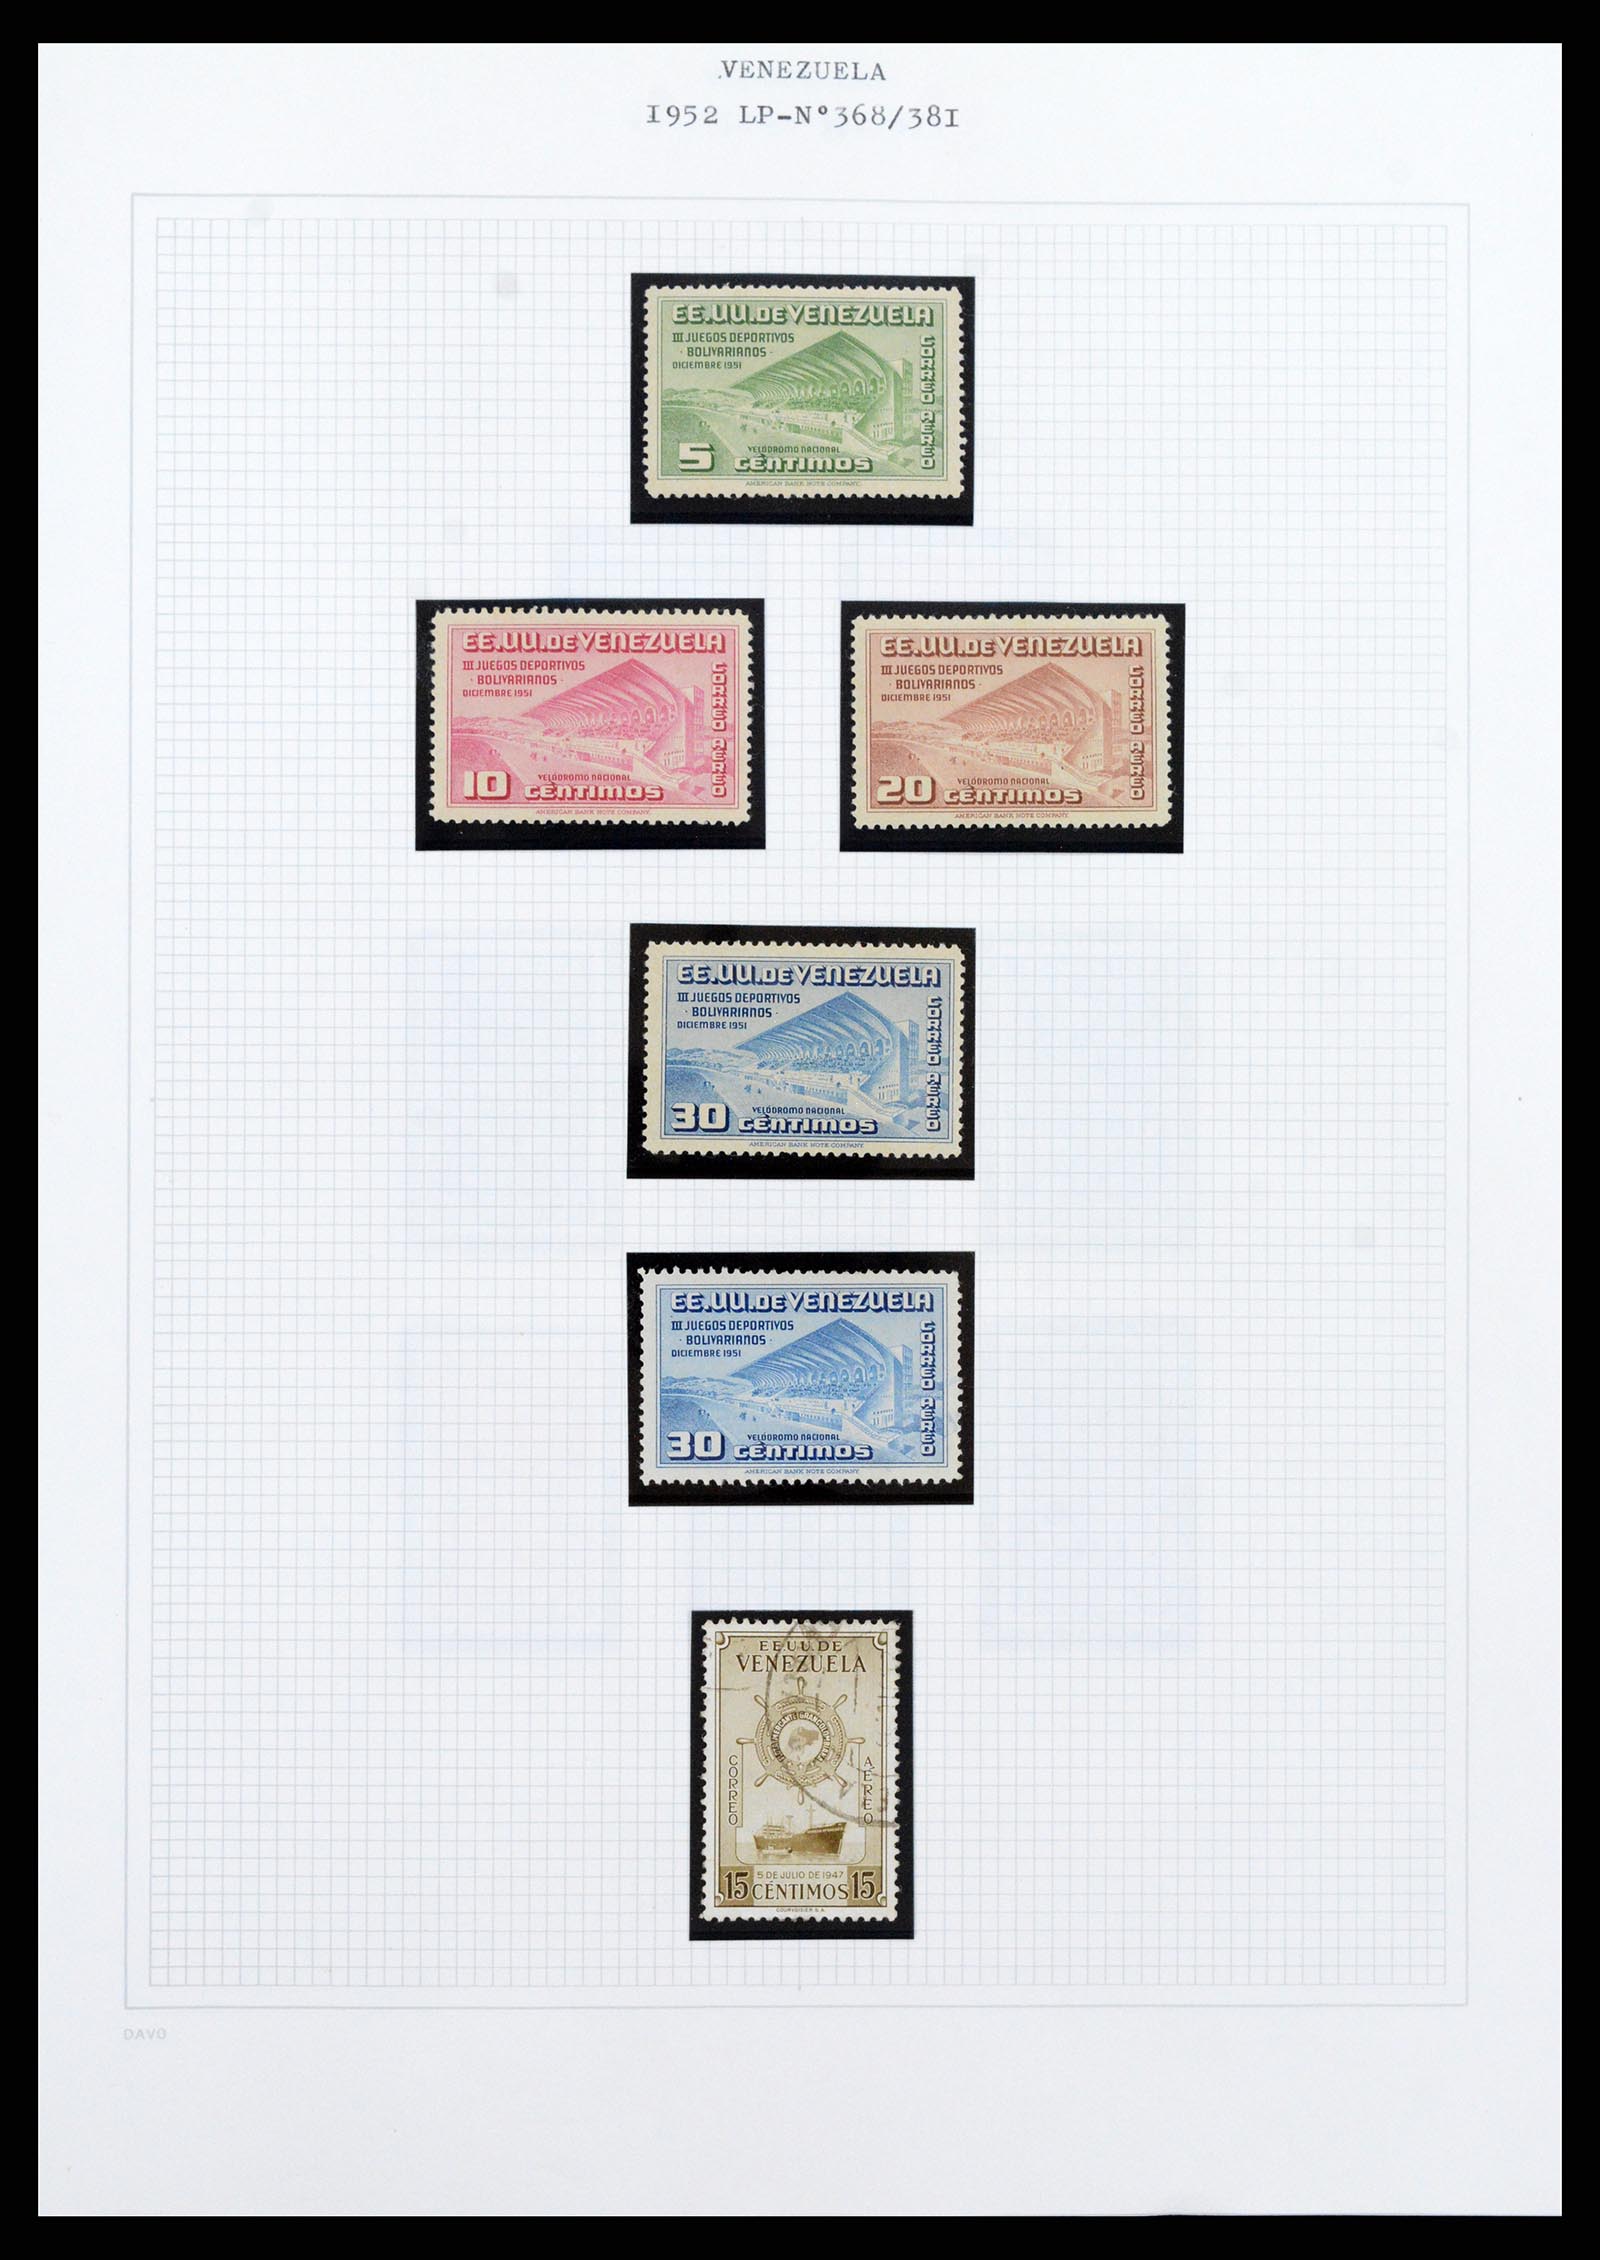 37353 077 - Stamp collection 37353 Venezuela 1880-1960.